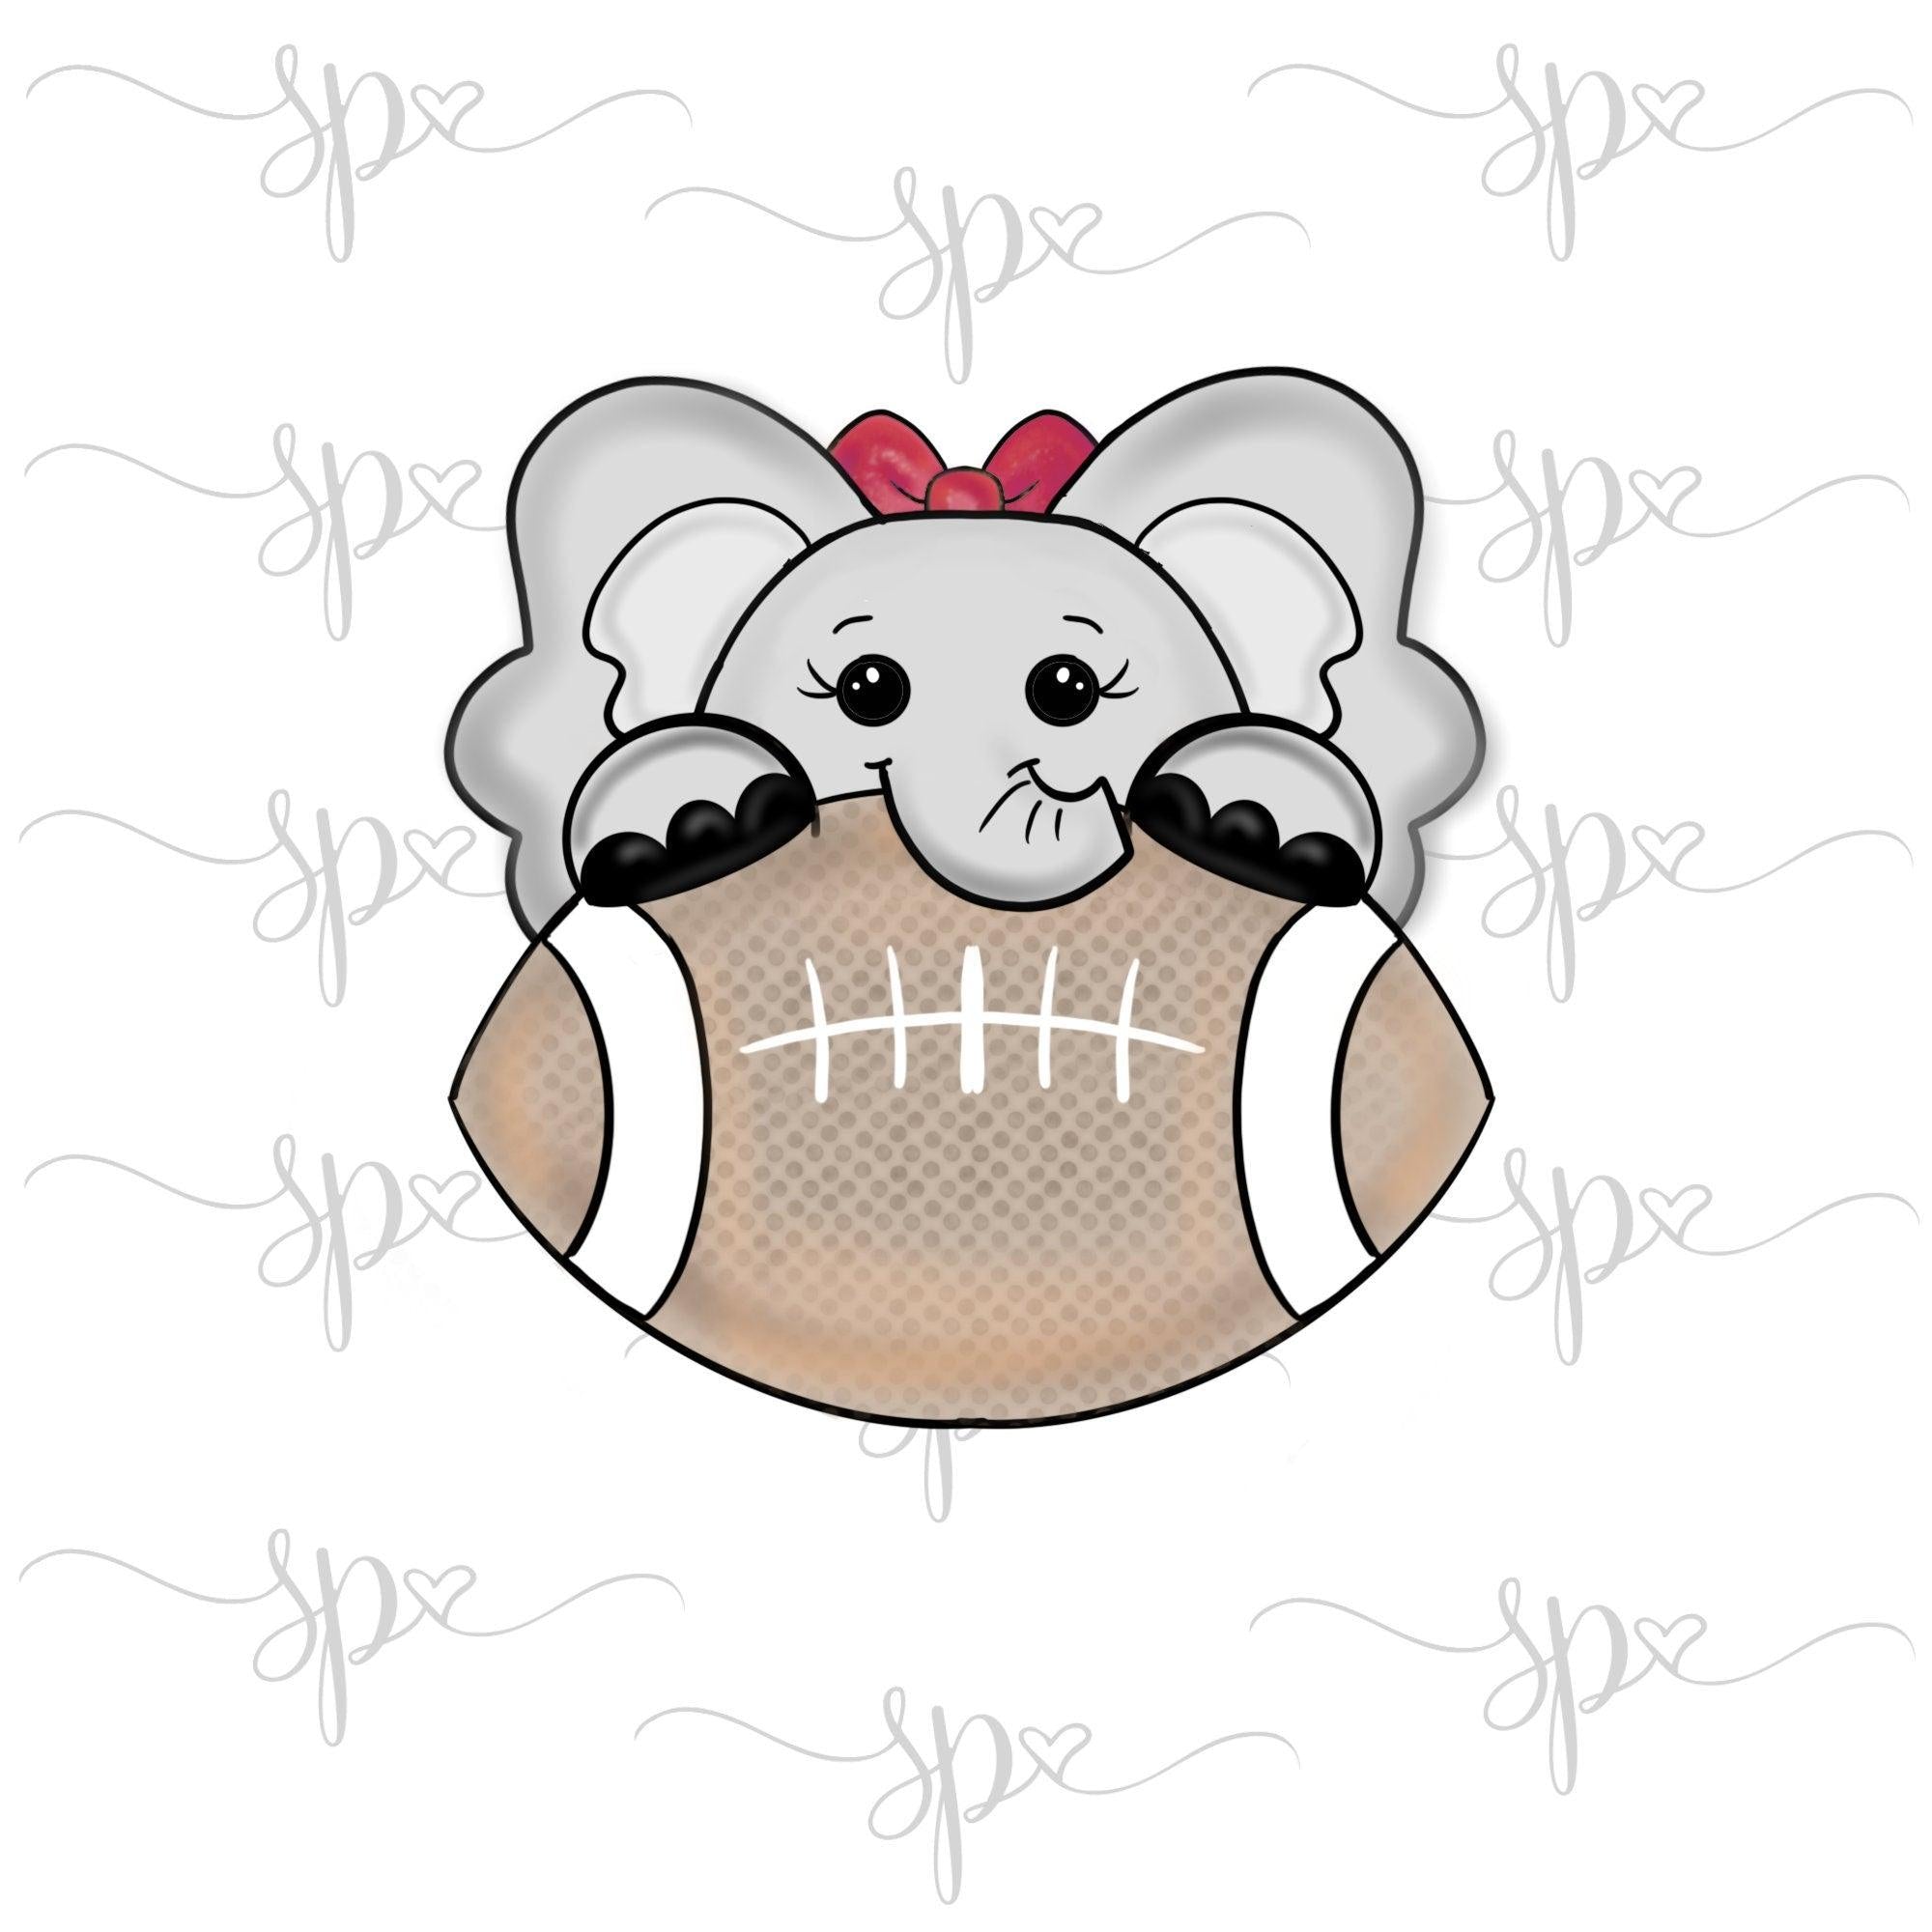 Girly Elephant Football Cookie Cutter - Sweetleigh 